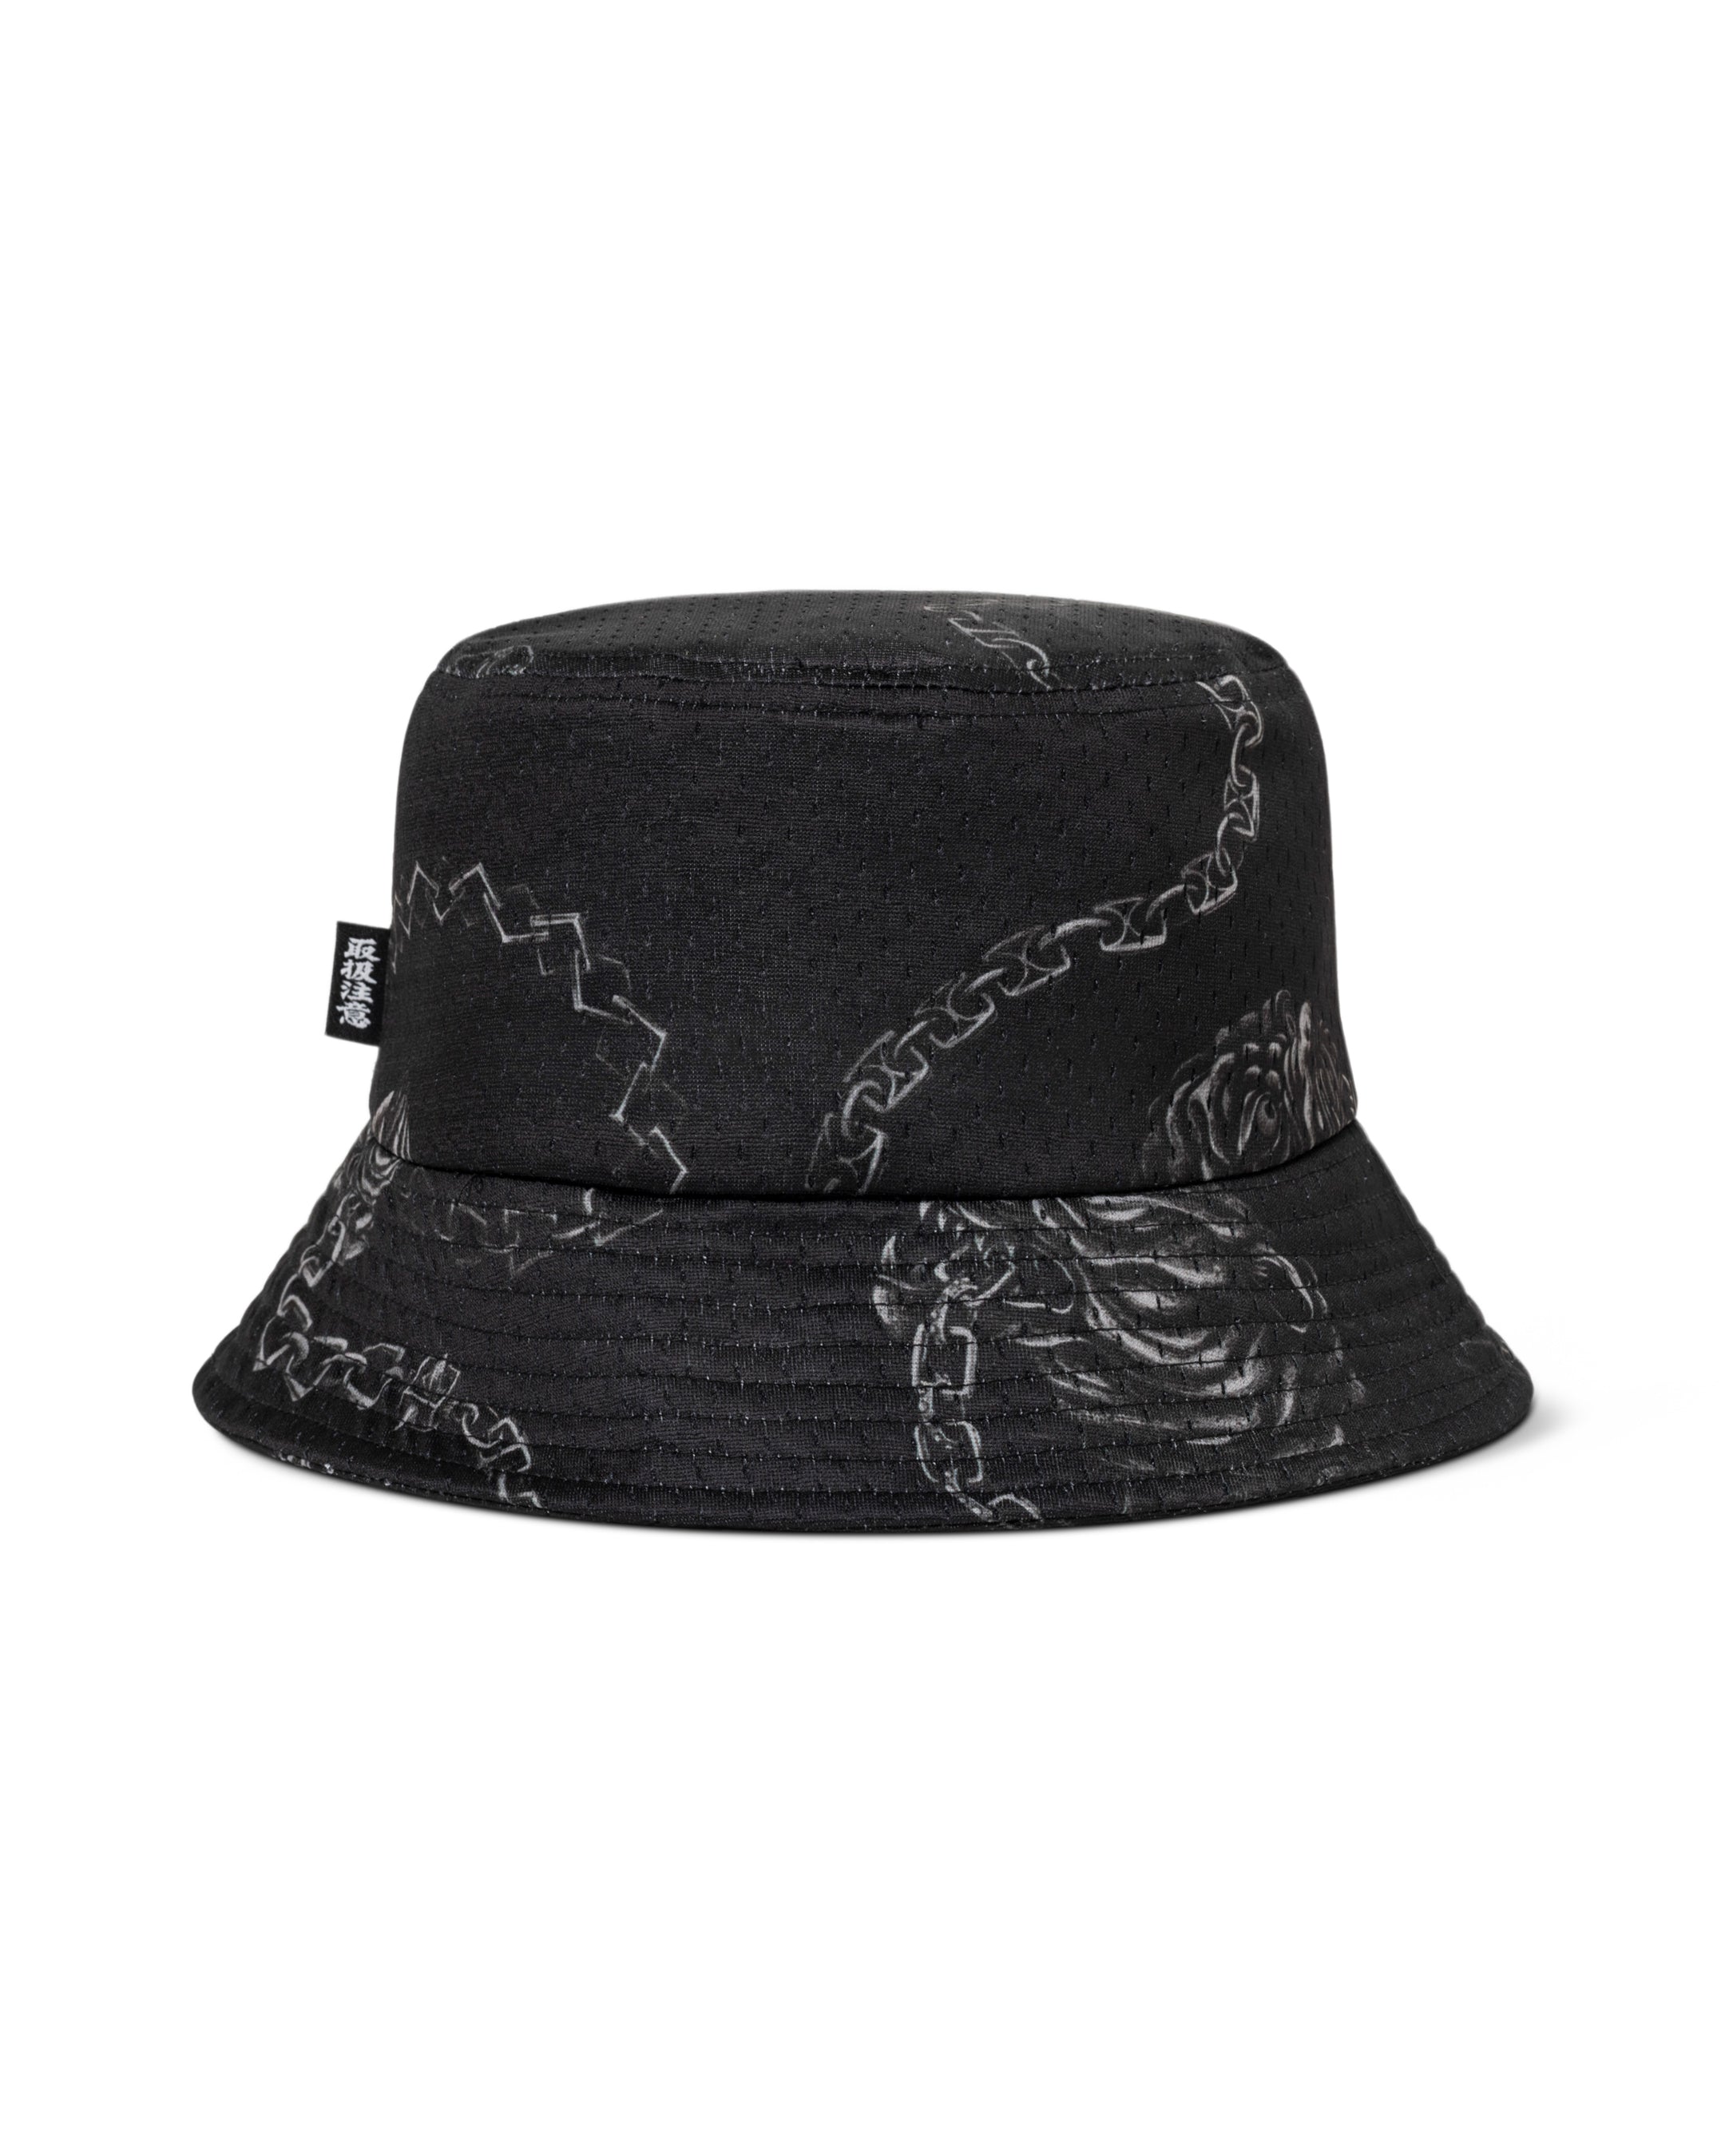 BlackEyePatch x WILDSIDE BUCKET HAT BLACK